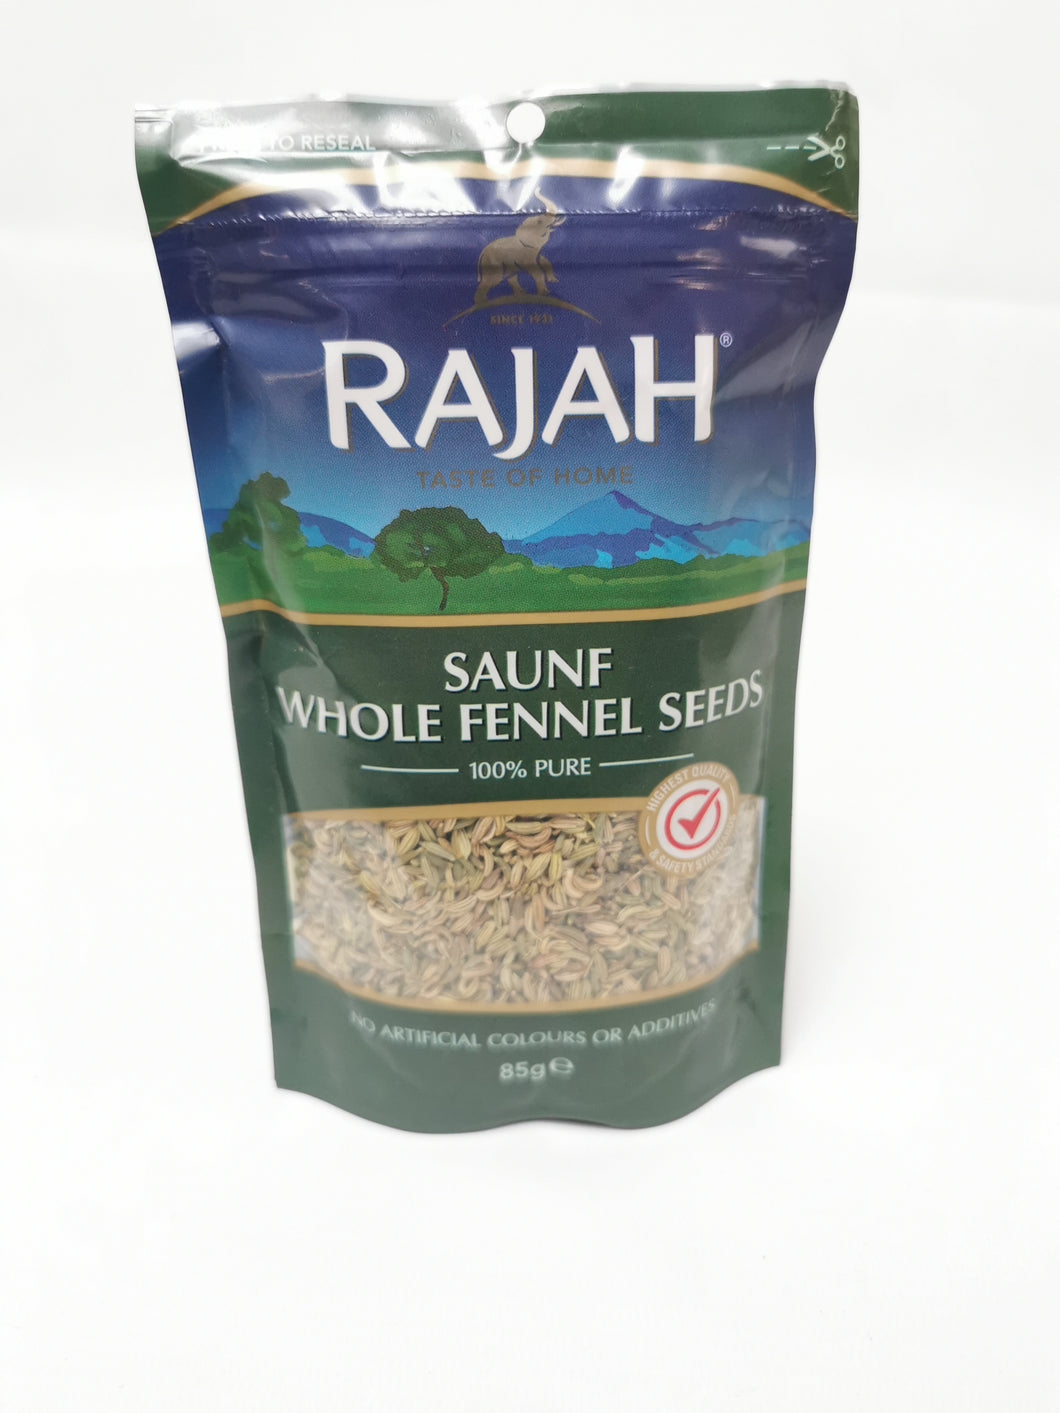 Rajah Saunf Whole Fennel Seeds